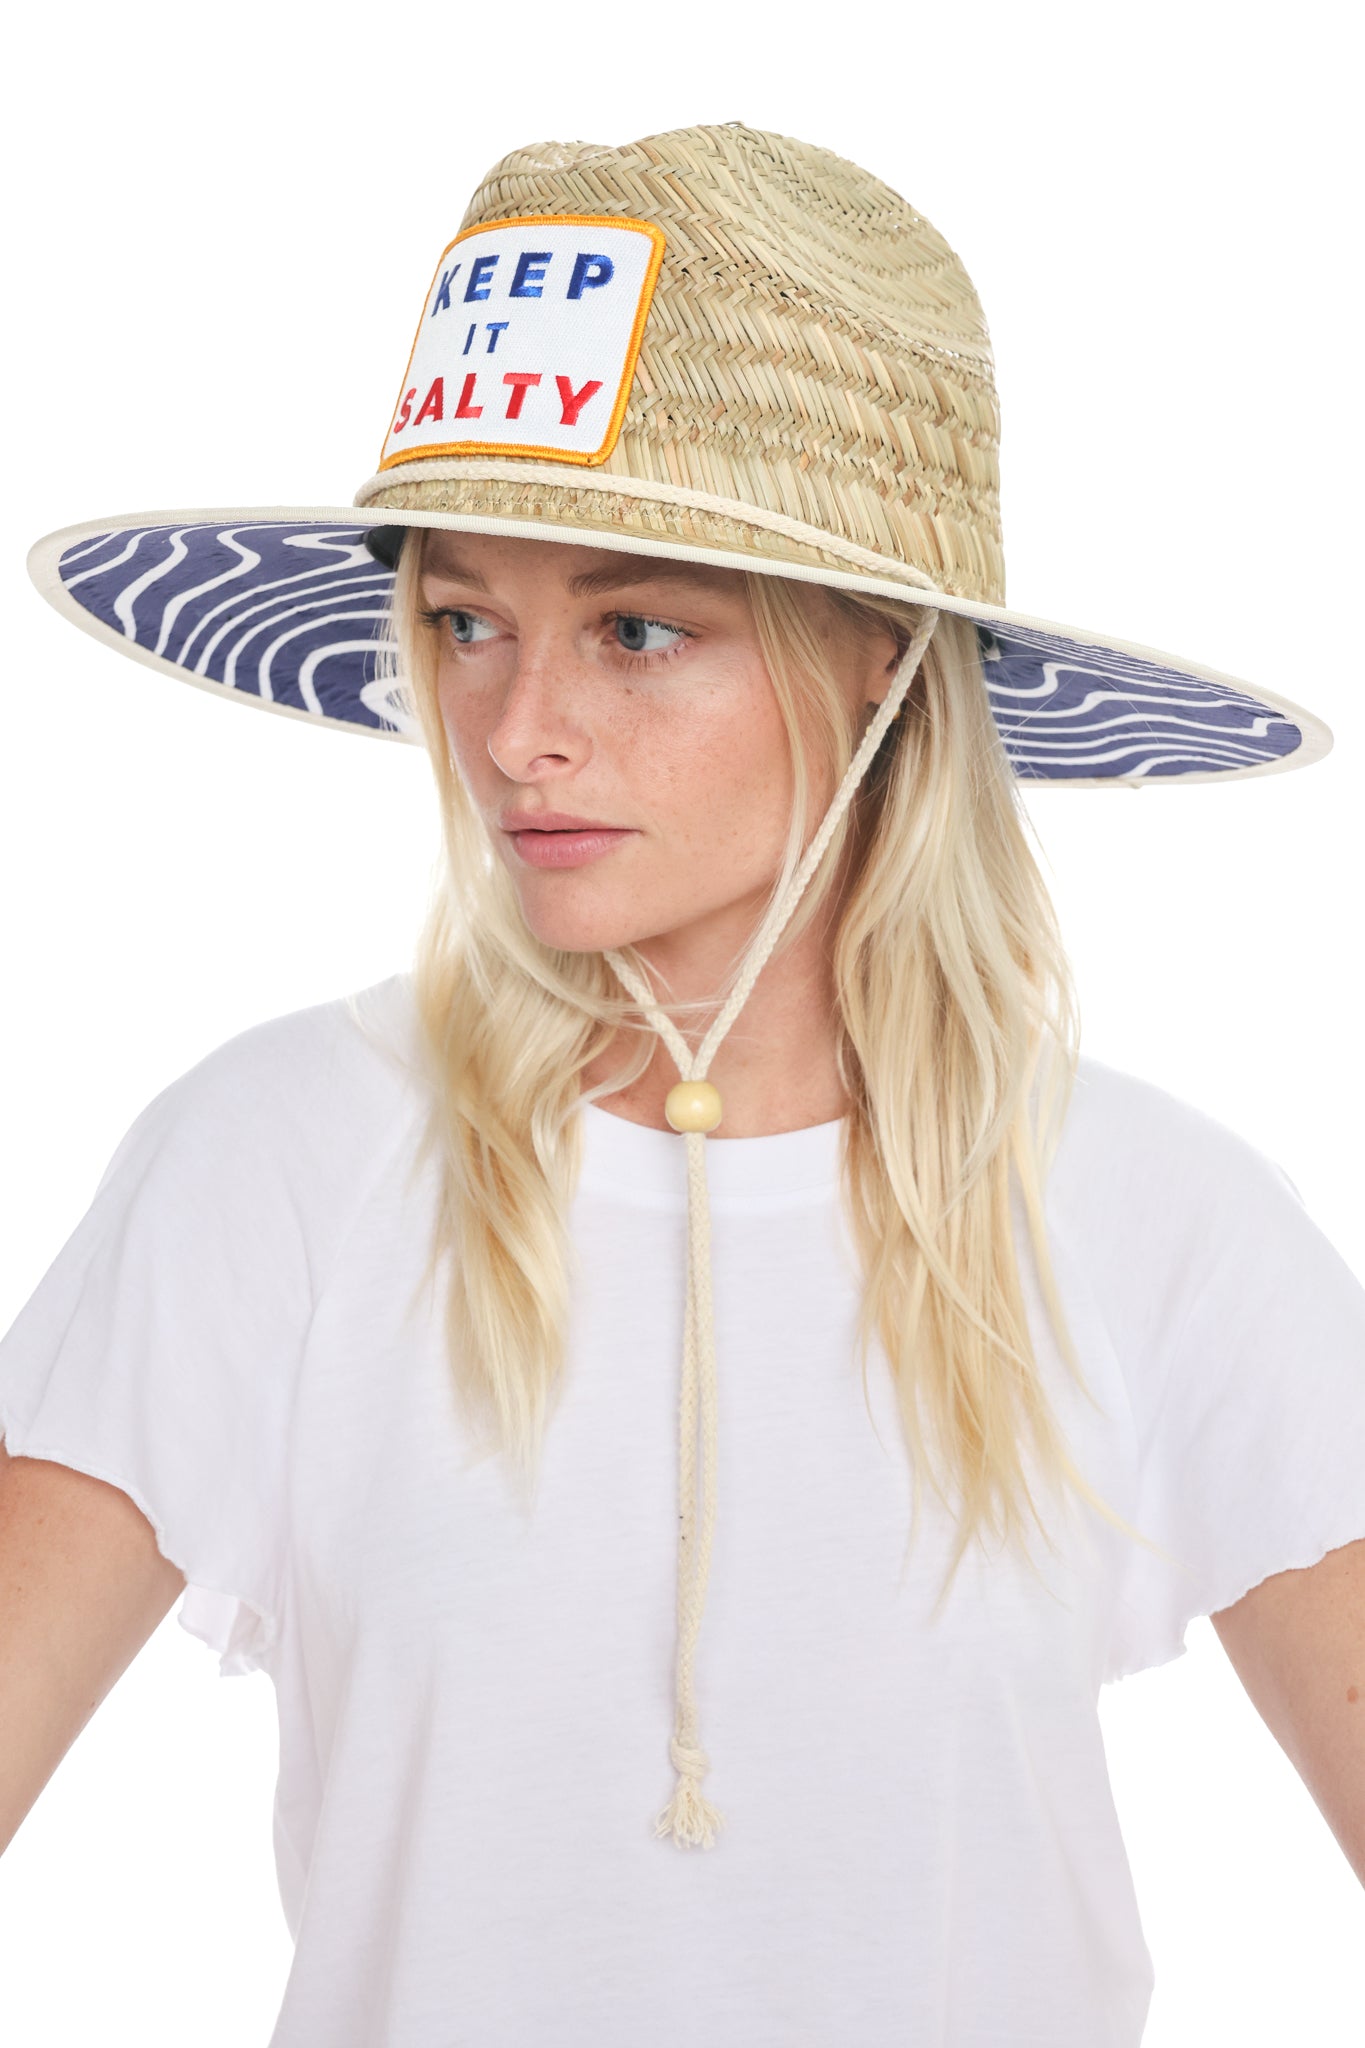 Keep It Salty Lifeguard Hat